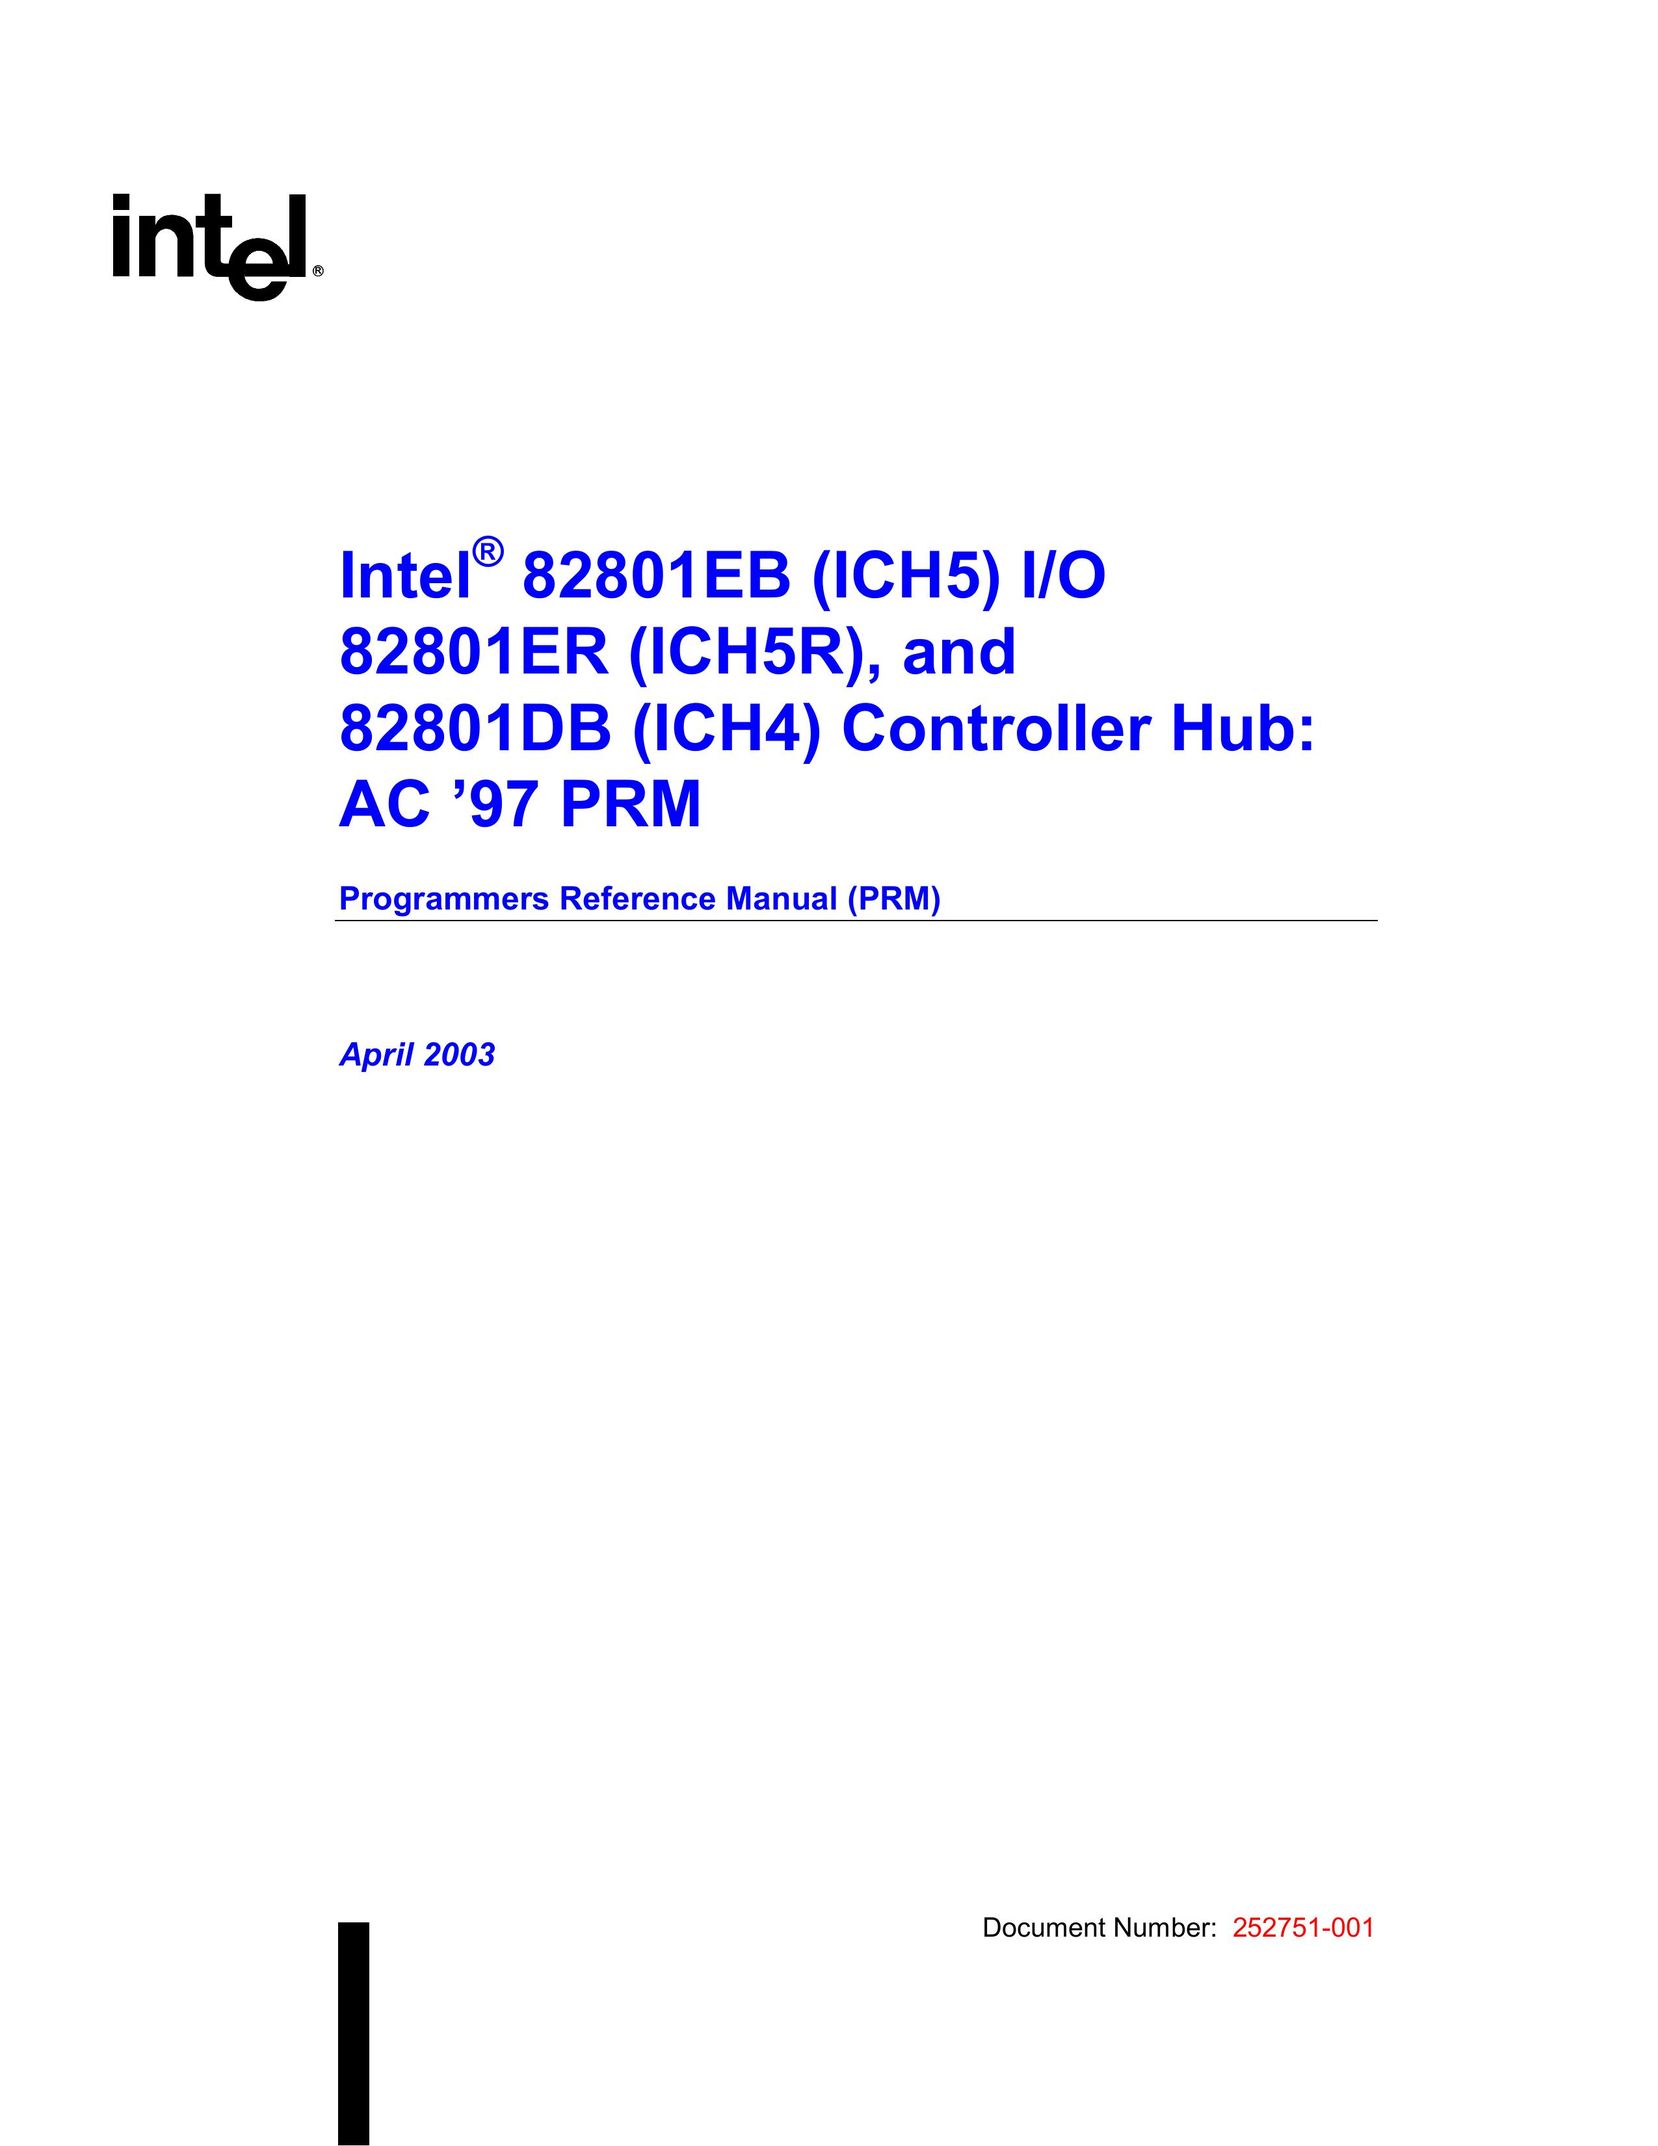 Intel 82801EB Universal Remote User Manual